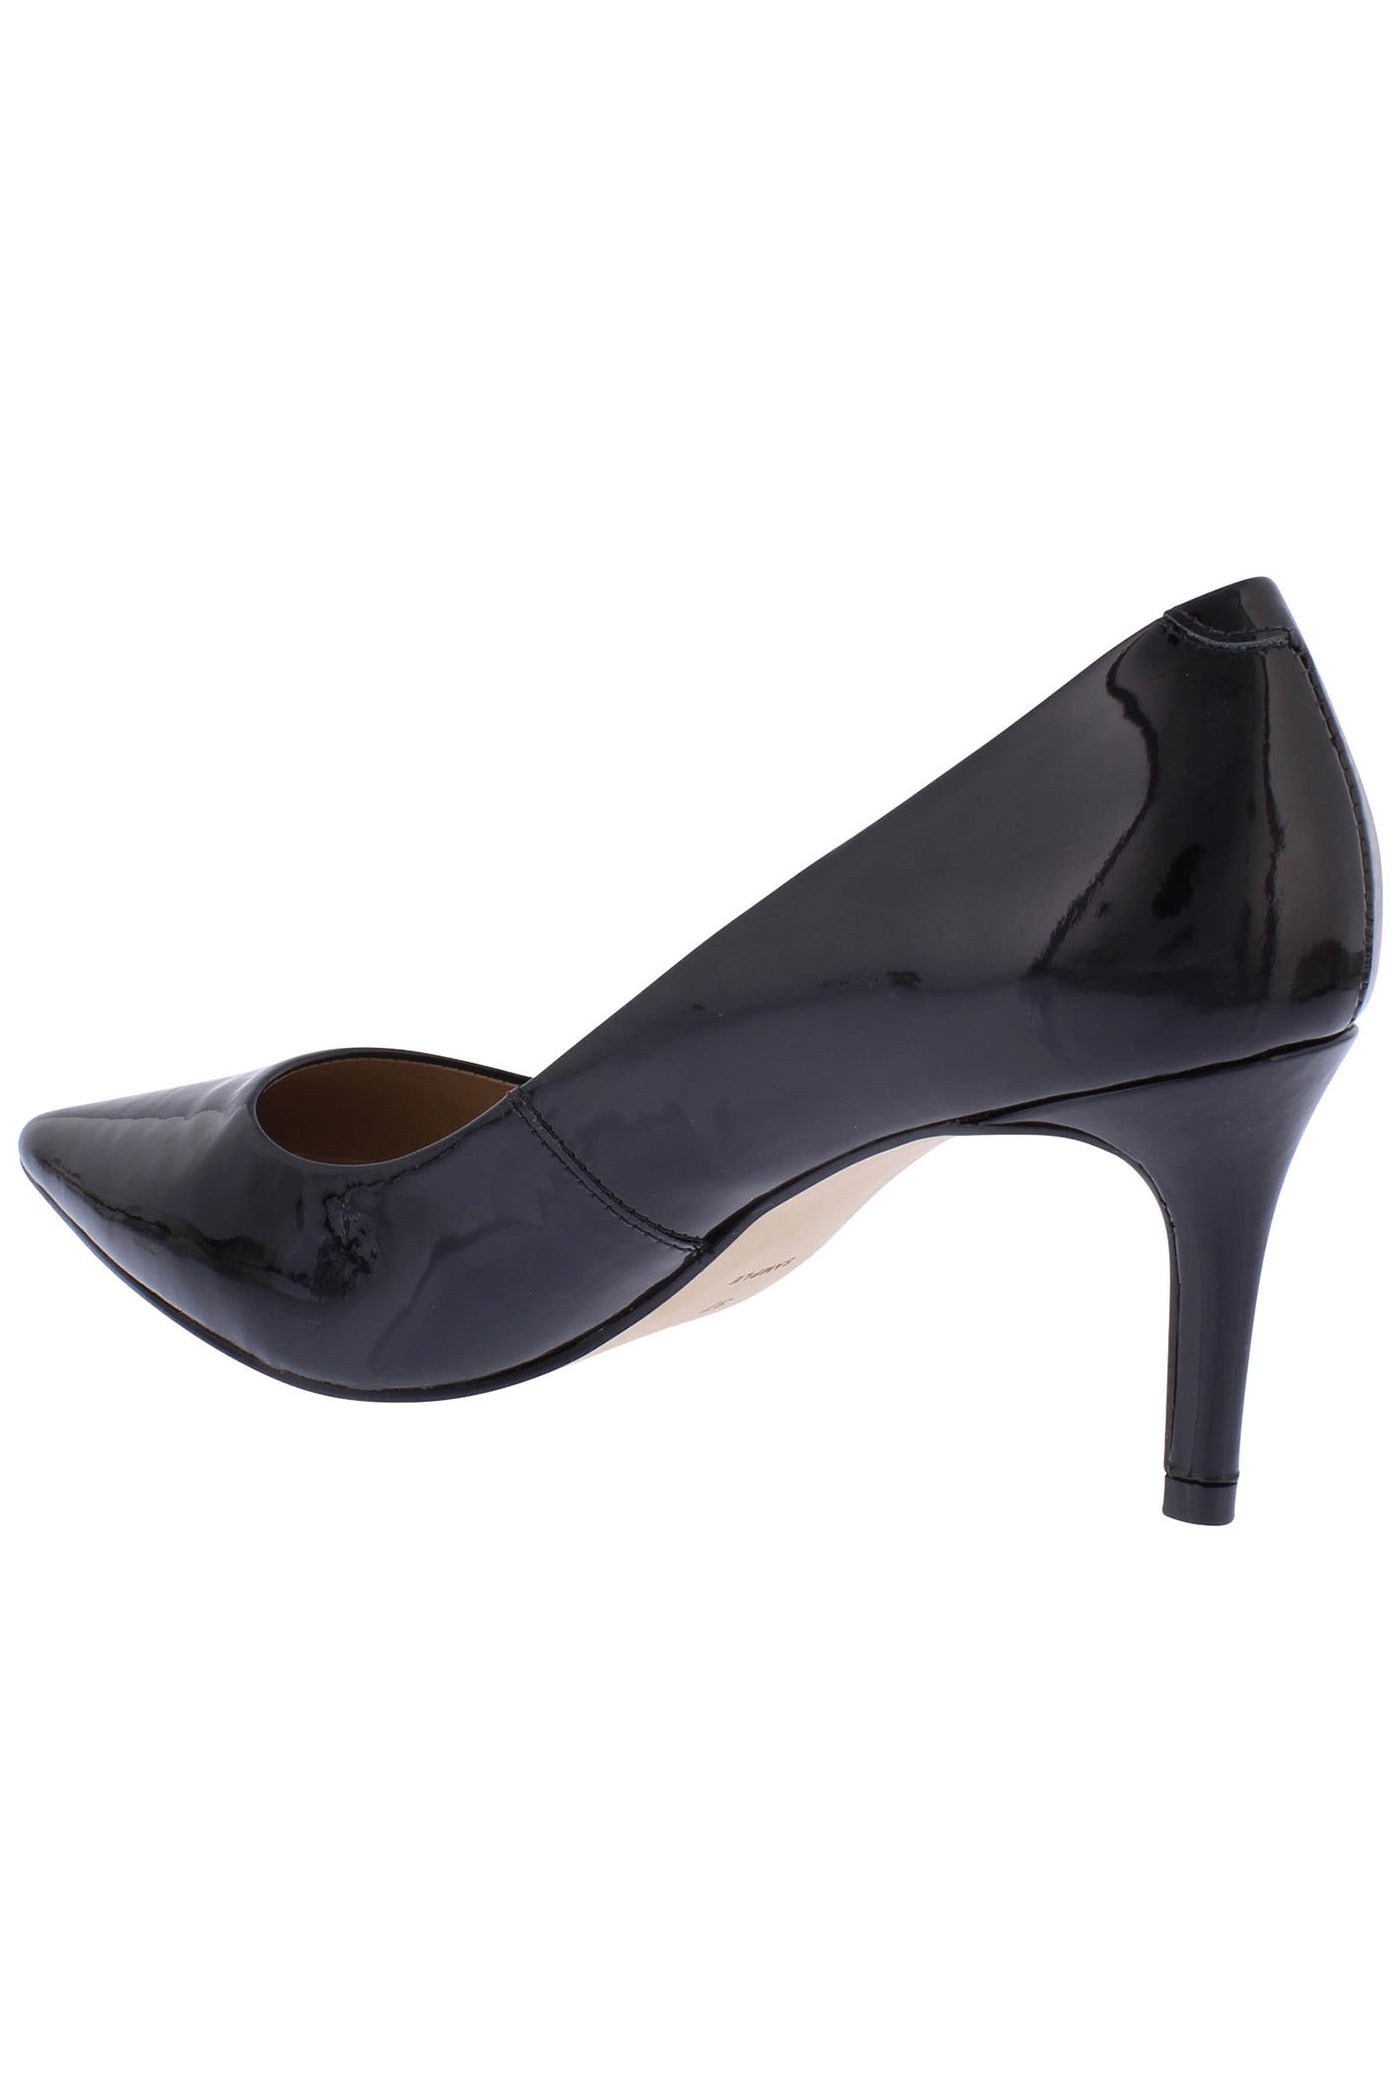 Capollini Petal C117 Black Patent Court Shoe